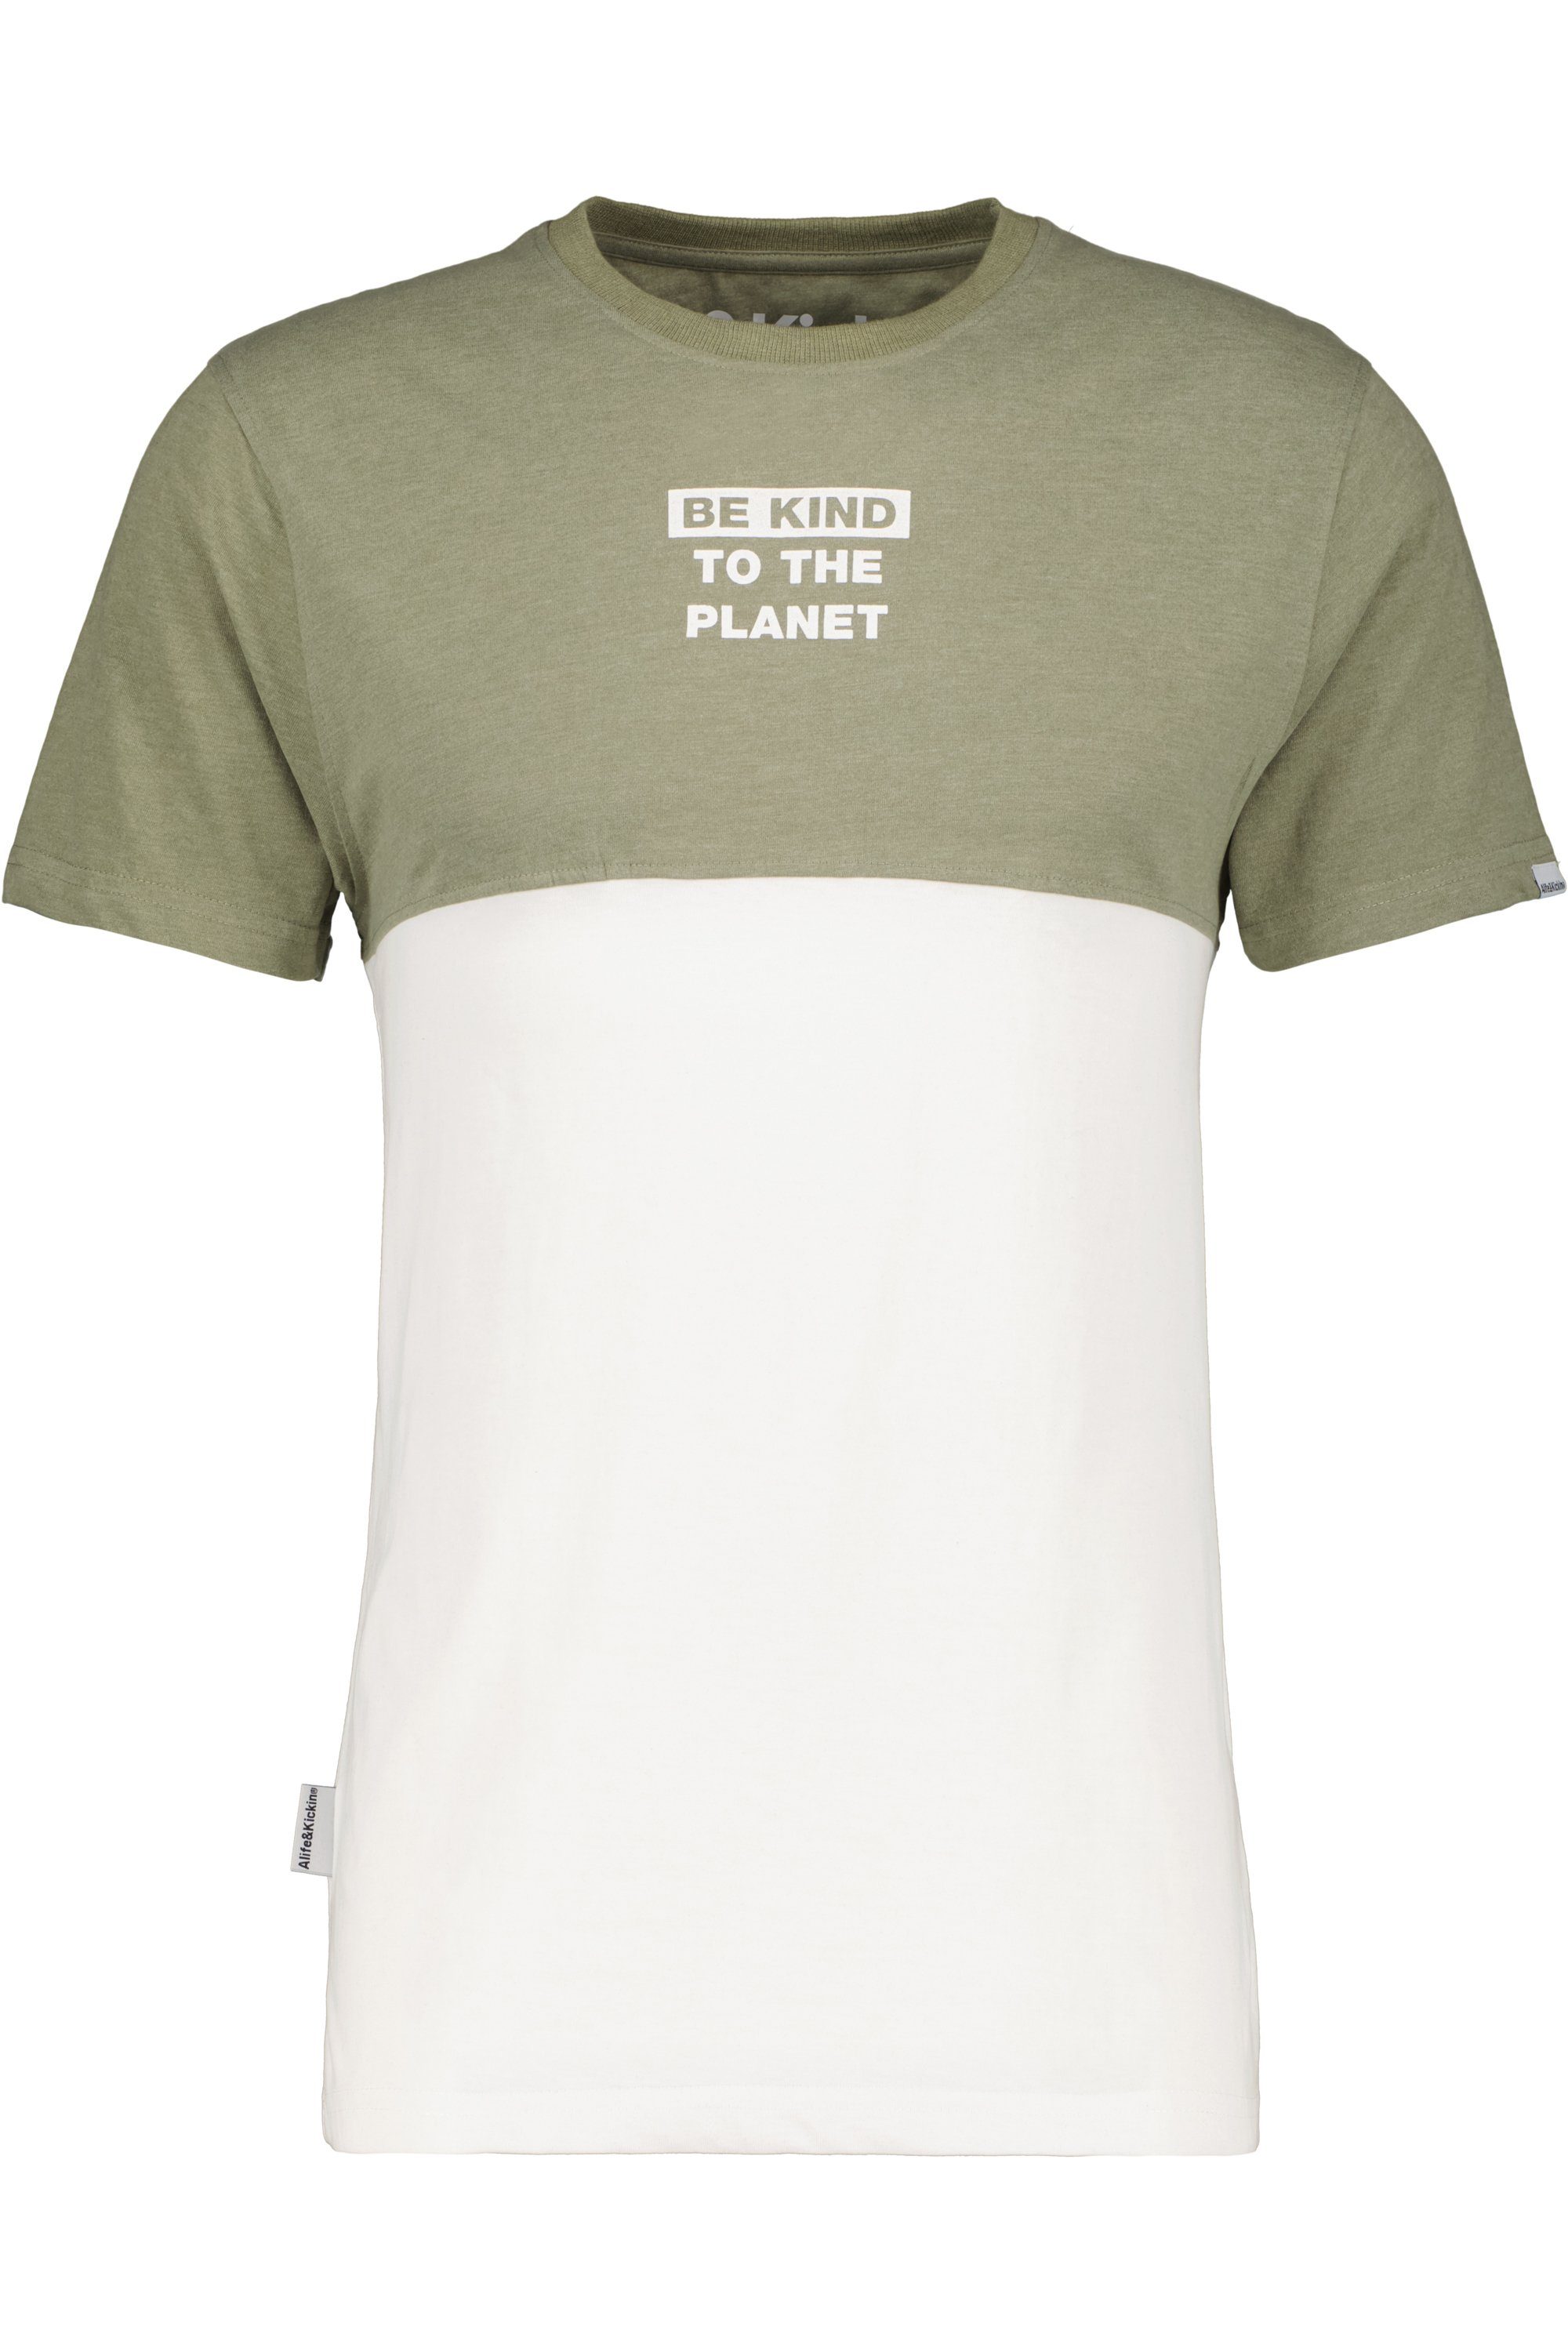 Alife & Kickin T-Shirt Herren cloudy T-Shirt LeoAK Shirt